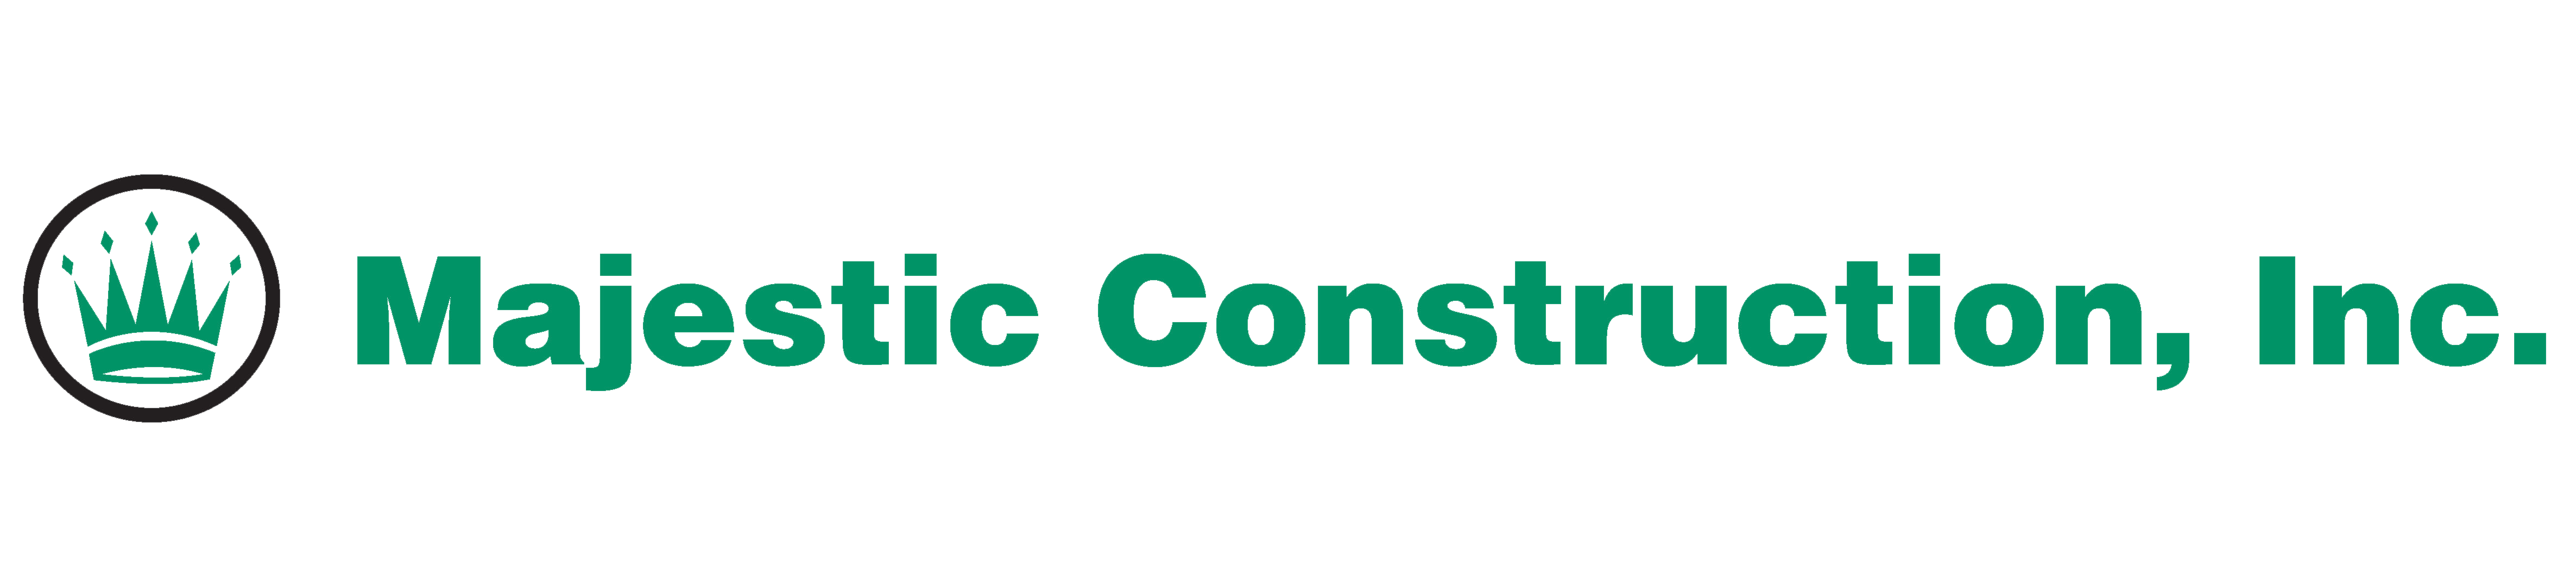 Majestics Construction, Inc.